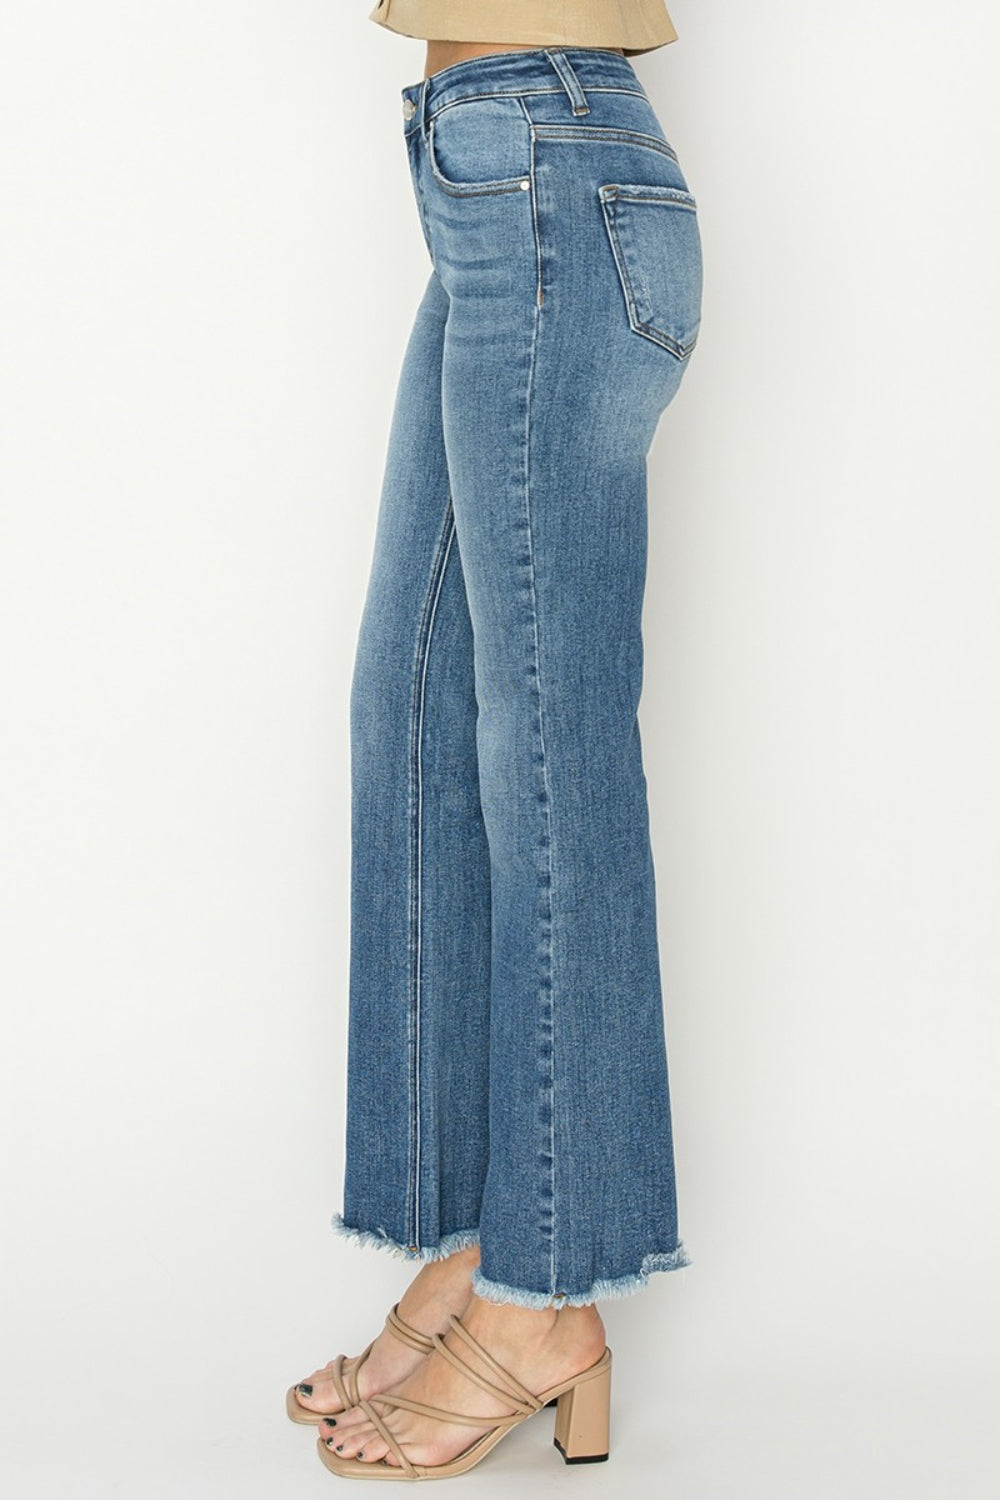 RISEN Mid-Rise Frayed Hem Bootcut Jeans